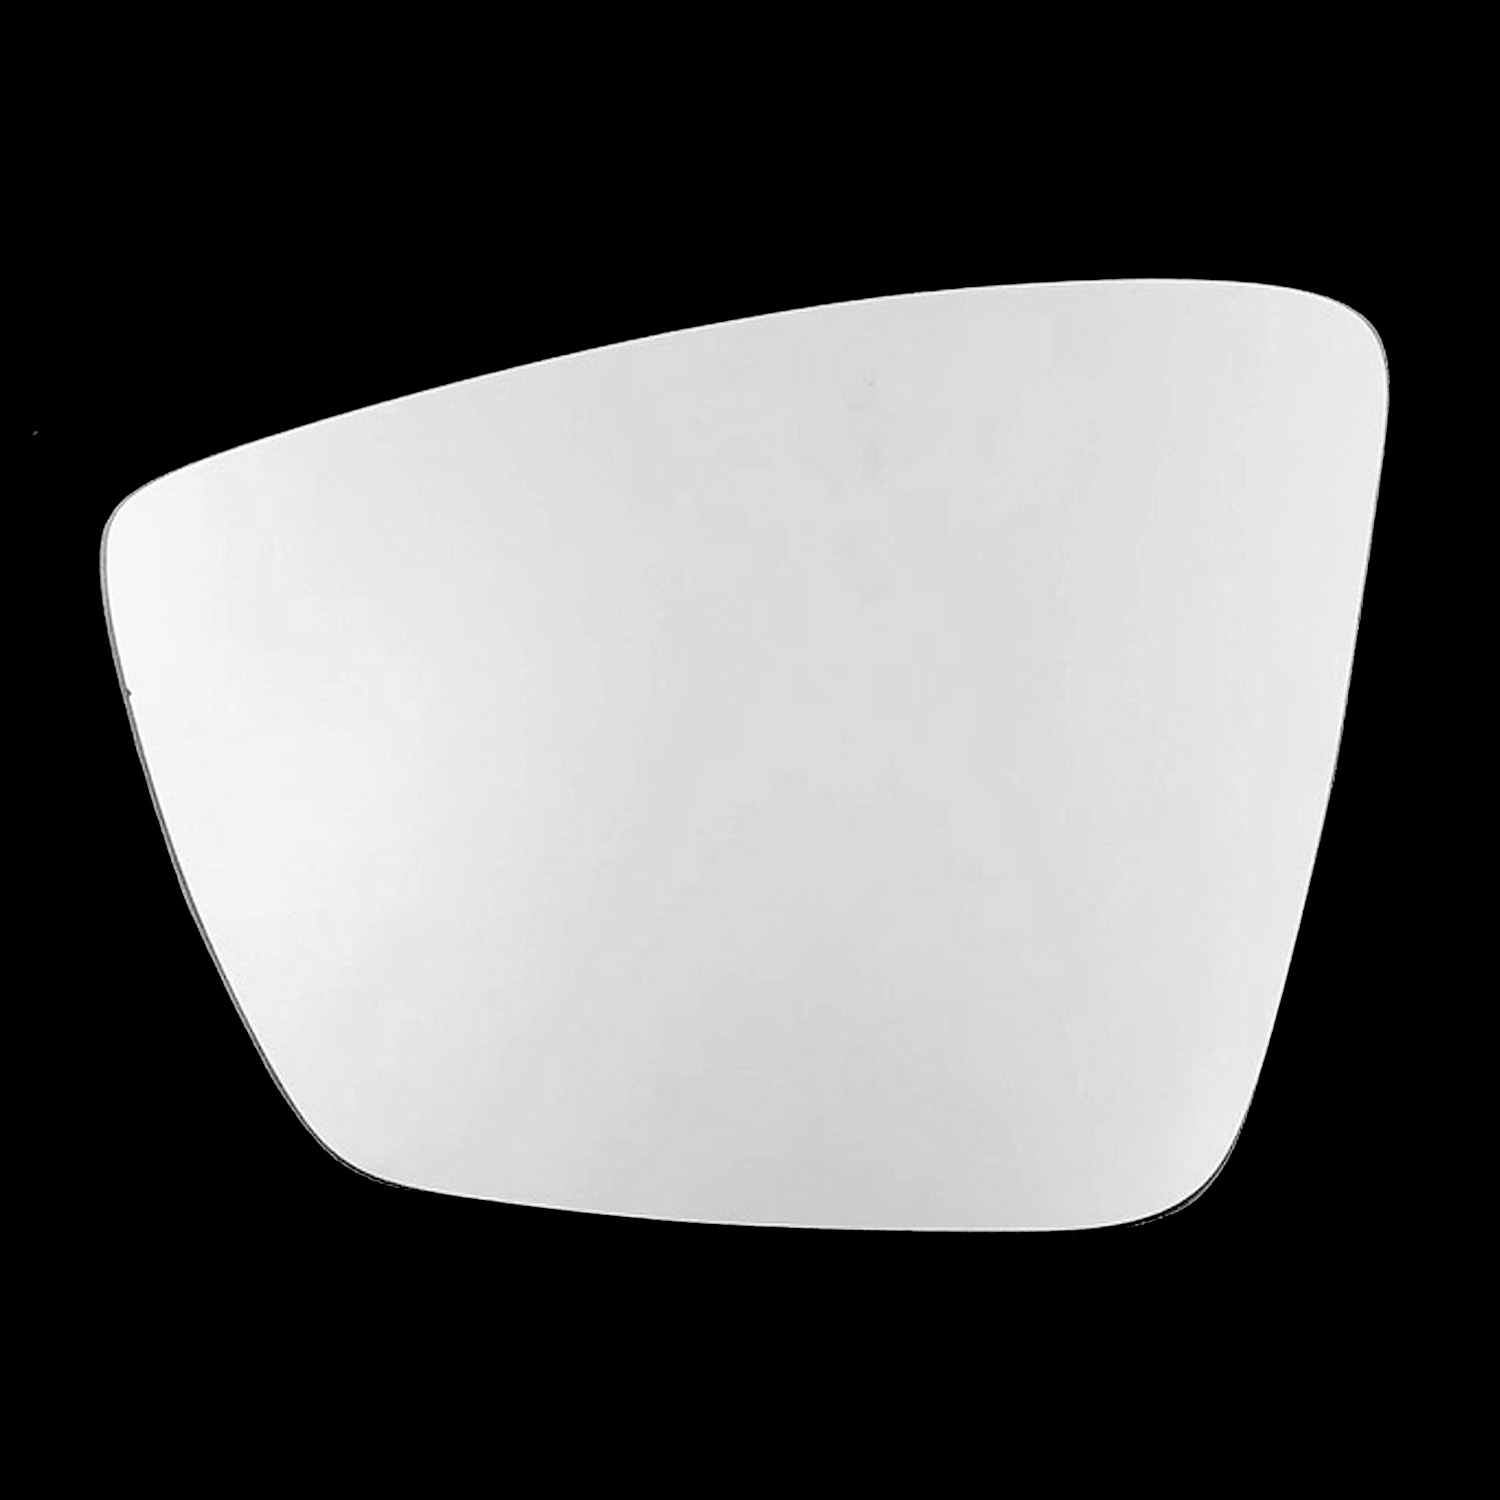 Skoda Kodiaq Wing Mirror Glass LEFT HAND ( UK Passenger Side ) 2016 to 2020 – Wide Angle Wing Mirror